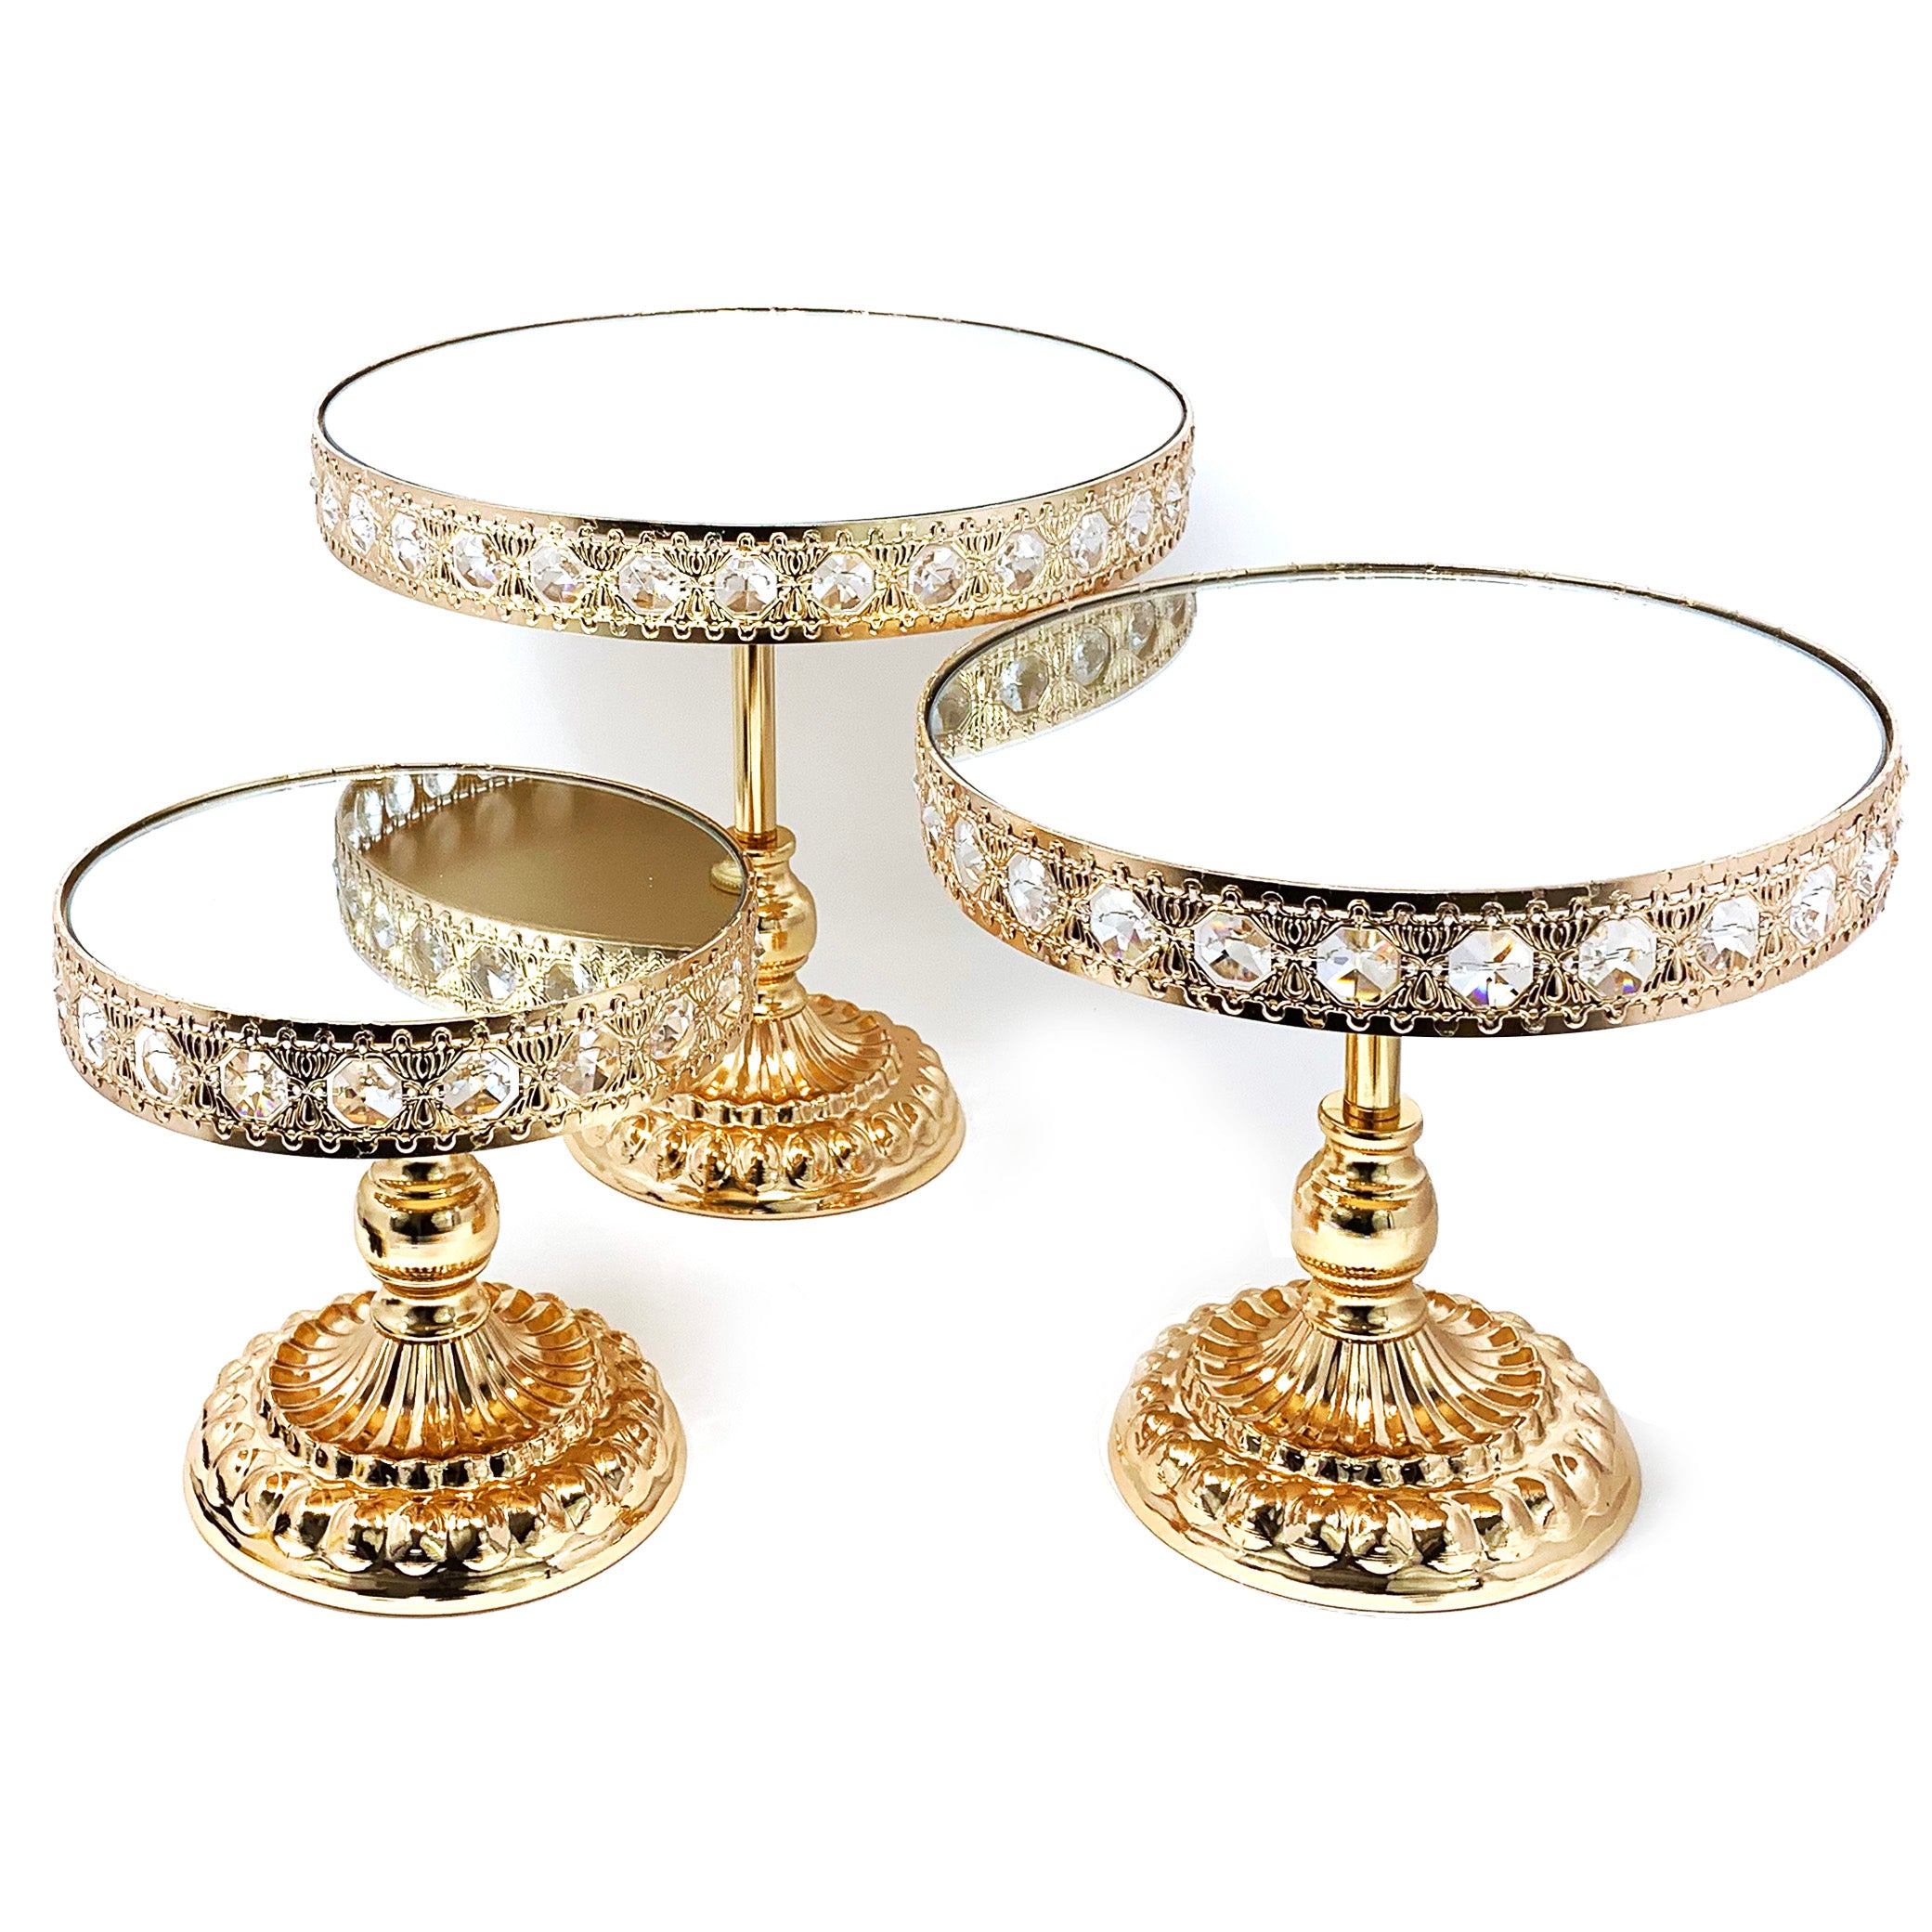 3pc CRYSTAL GOLD METAL WEDDING CAKE DESSERT STANDS | eBay